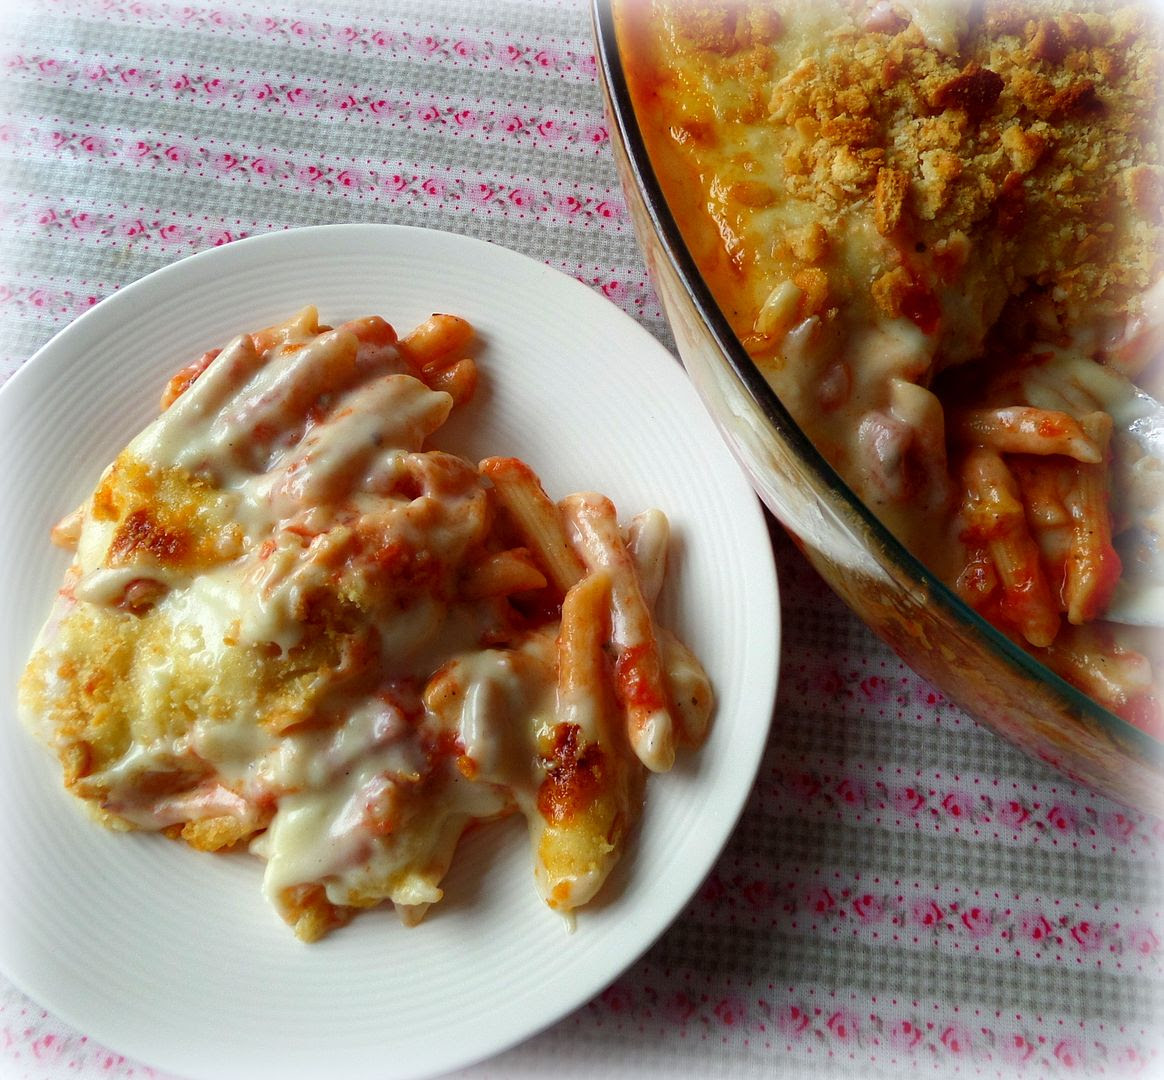 Macaroni, Cheese and Tomato Bake